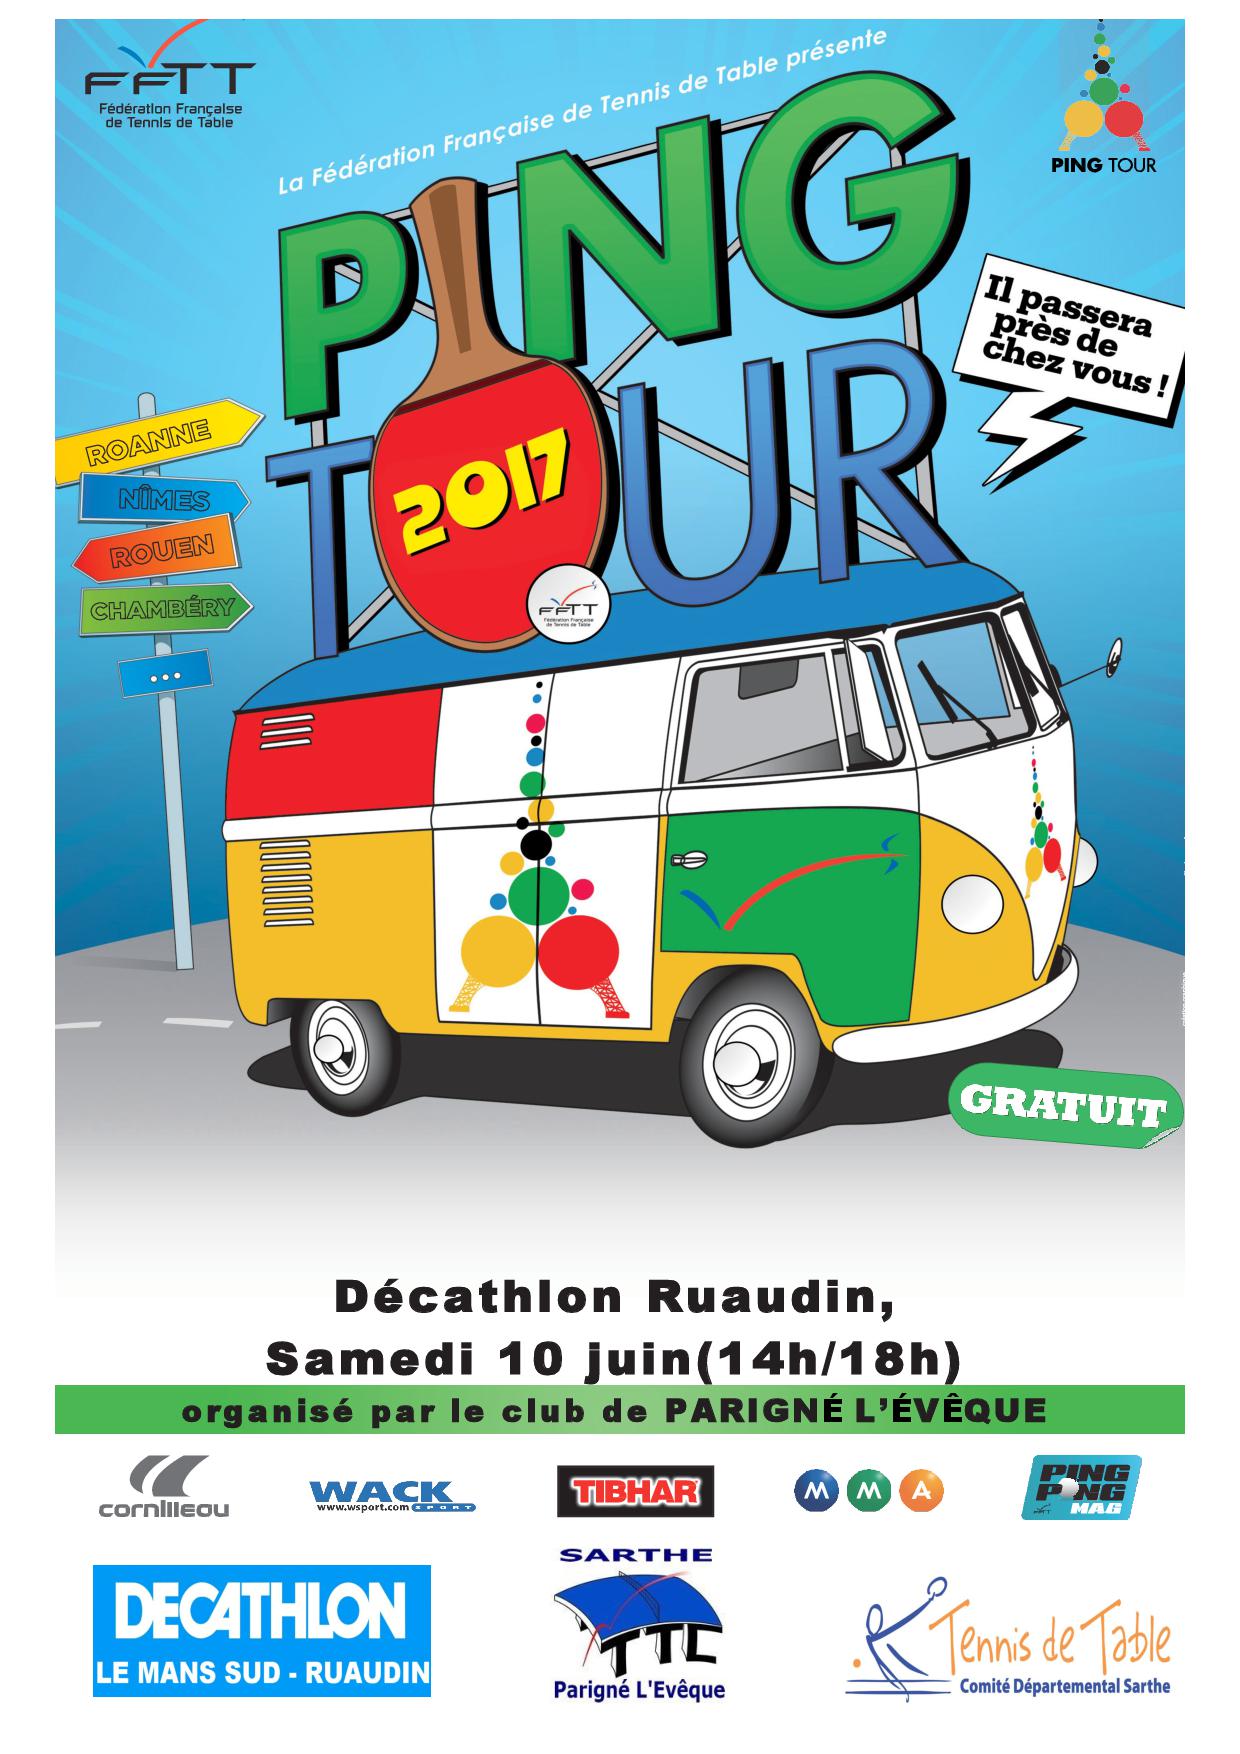 Ping Tour Sarthe Décathlon